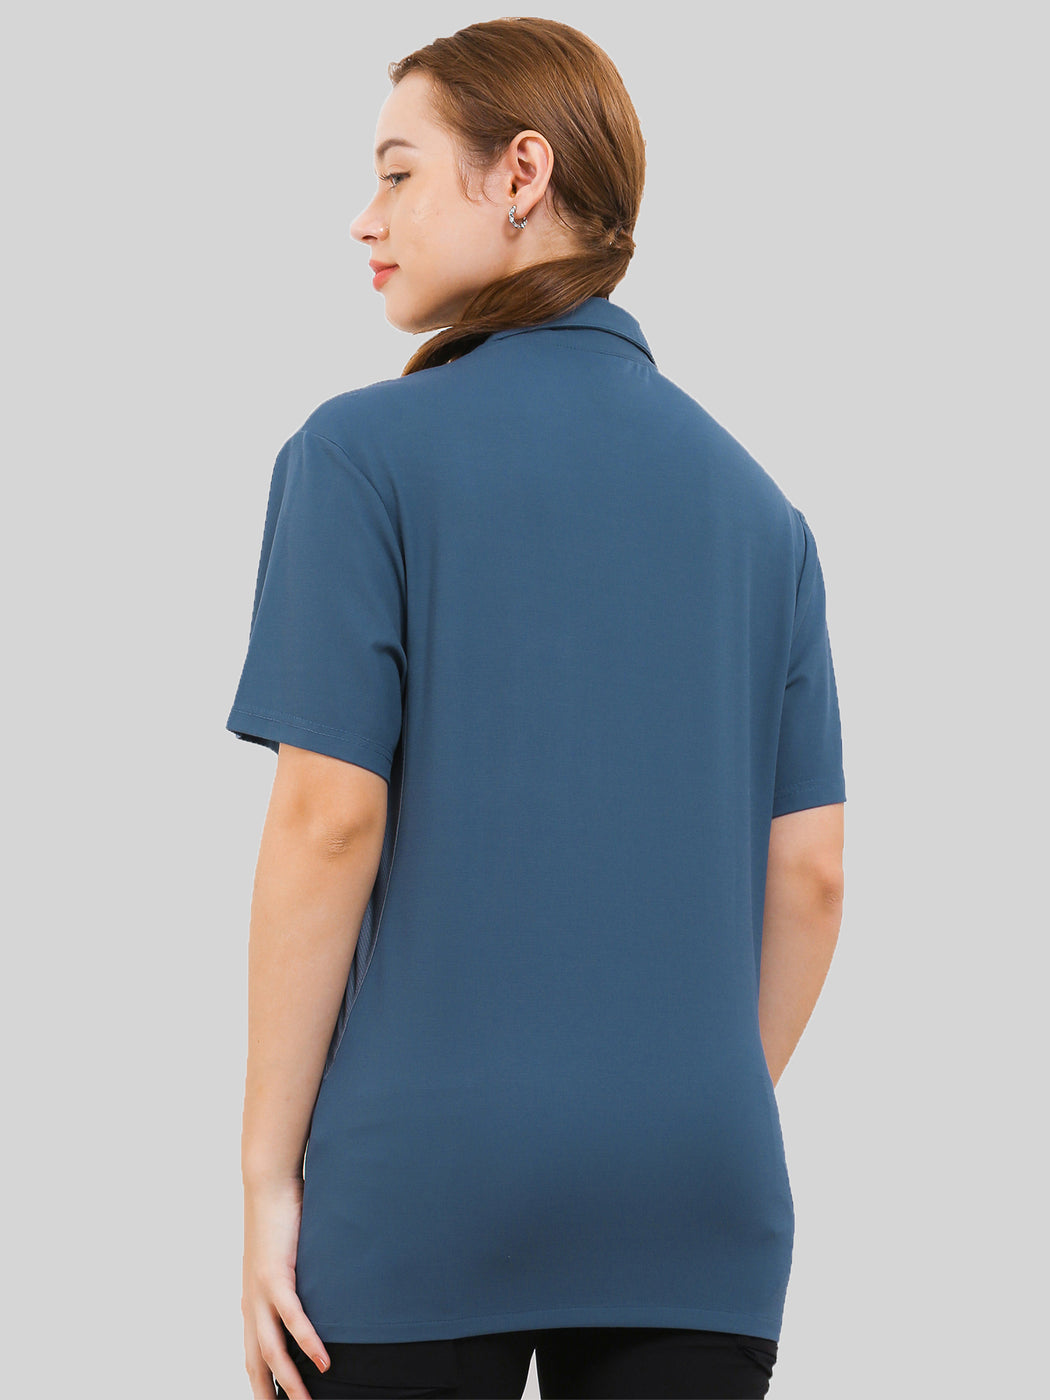 Unisex Ultimate Utilitarian Shirt Female Blue